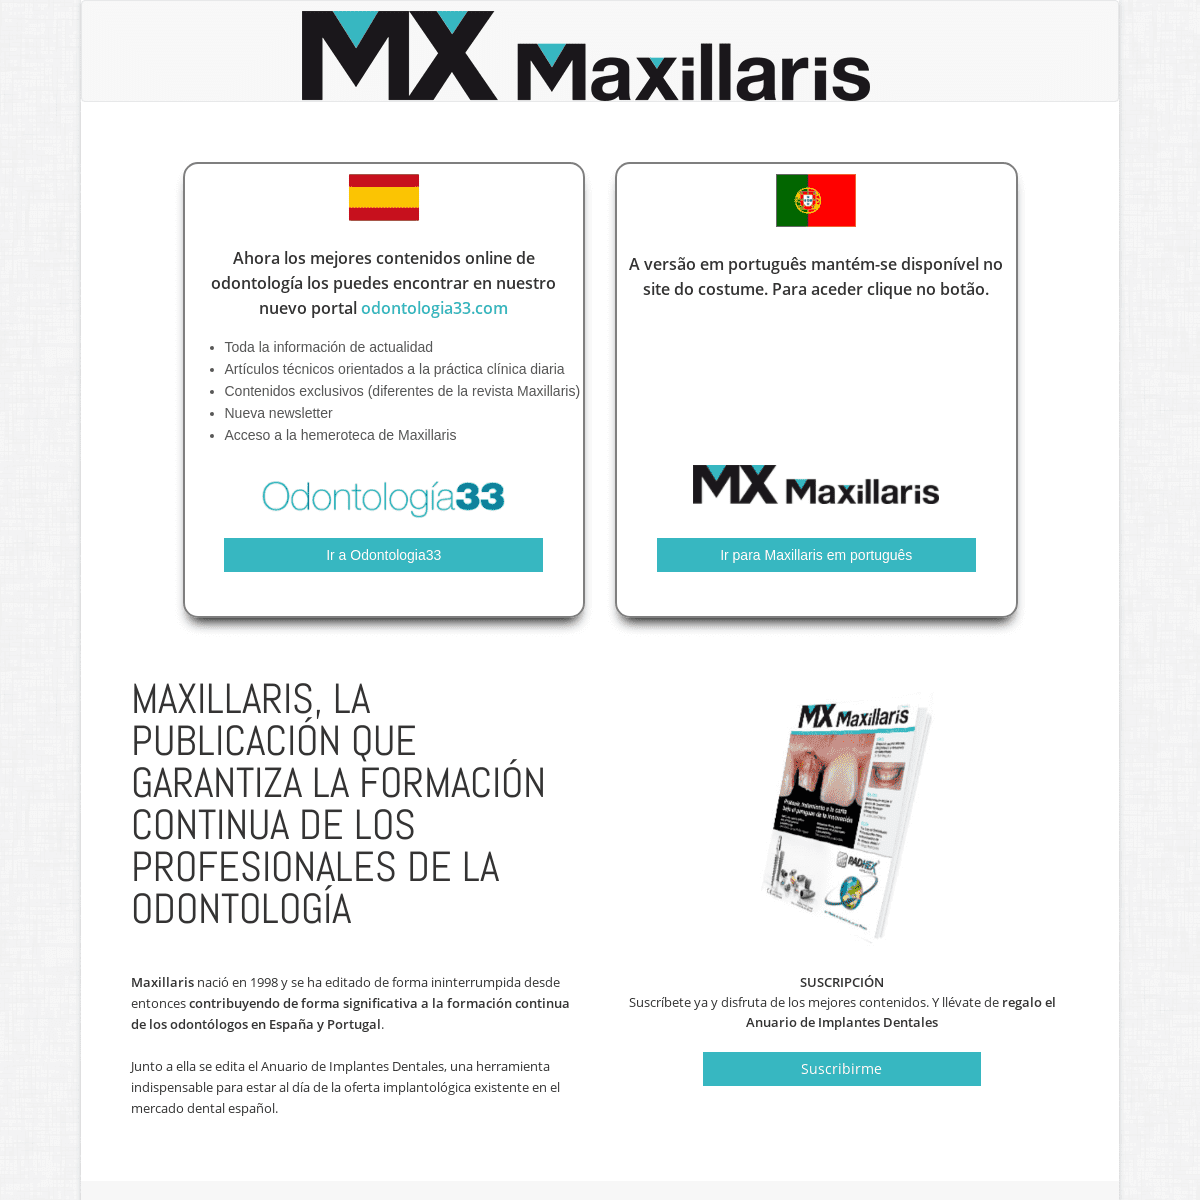 A complete backup of https://maxillaris.com